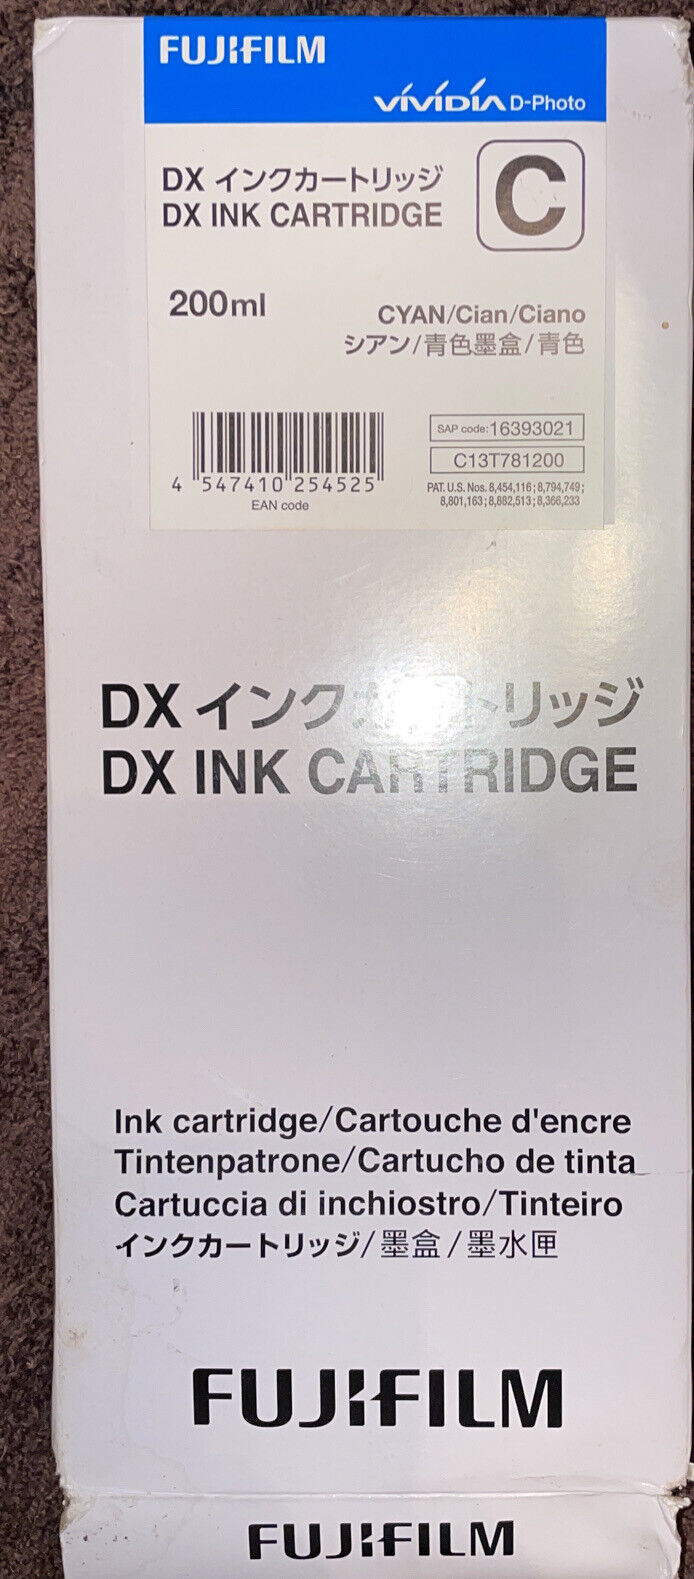 Genuine NEW Sealed With Box Fujifilm DX Ink Cartridge - 200ml, Cyan